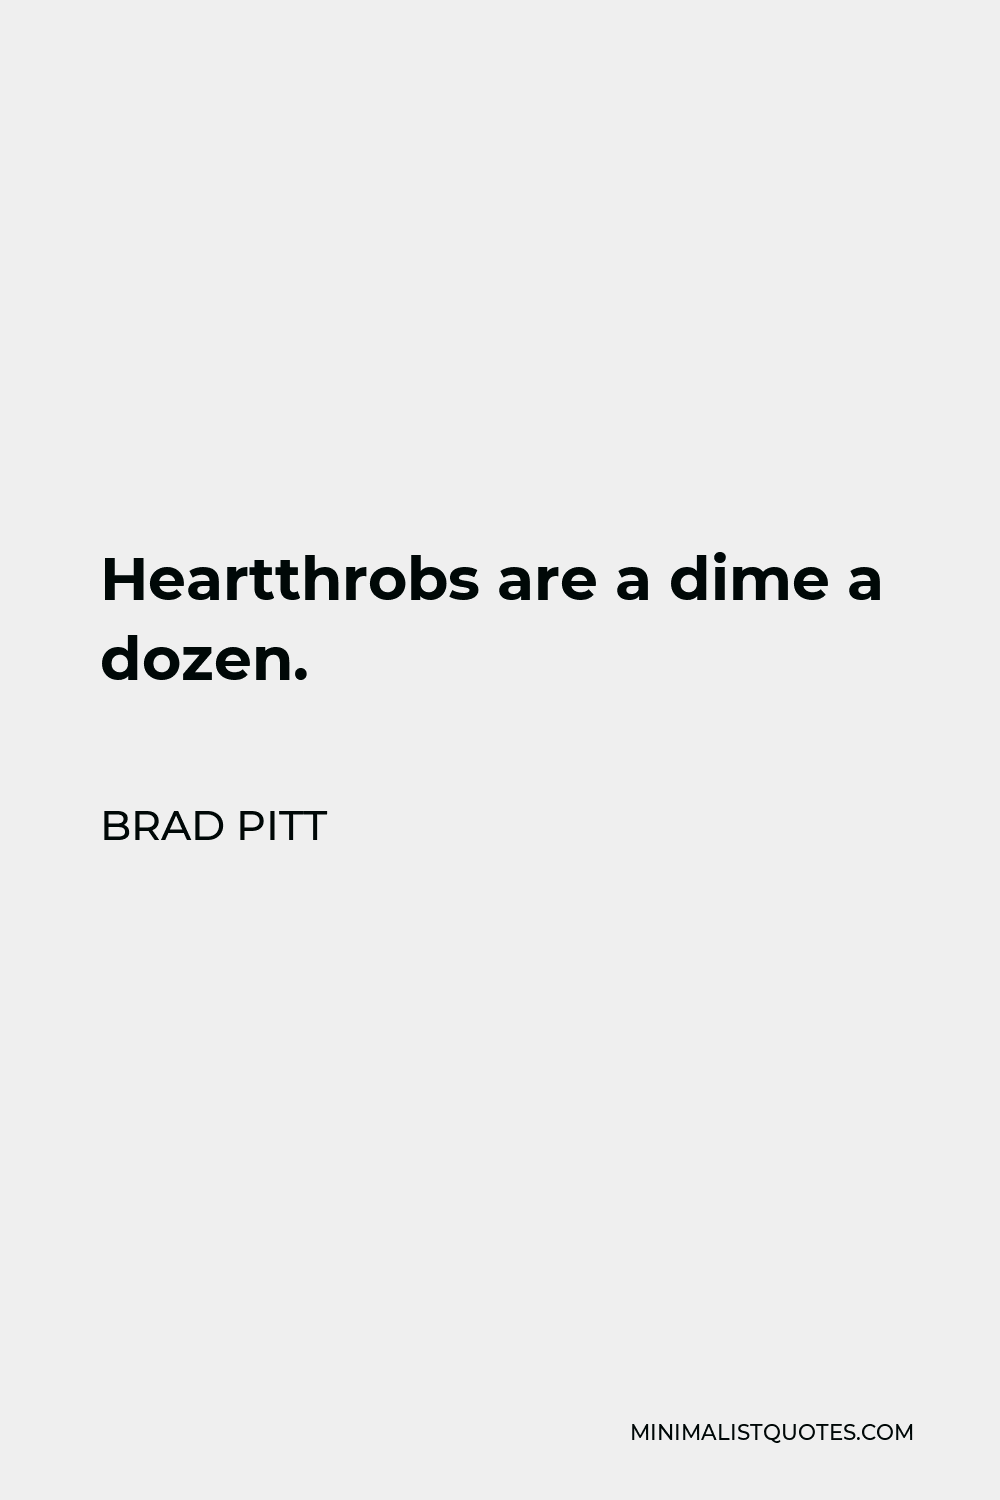 Brad Pitt Quote - Heartthrobs are a dime a dozen.